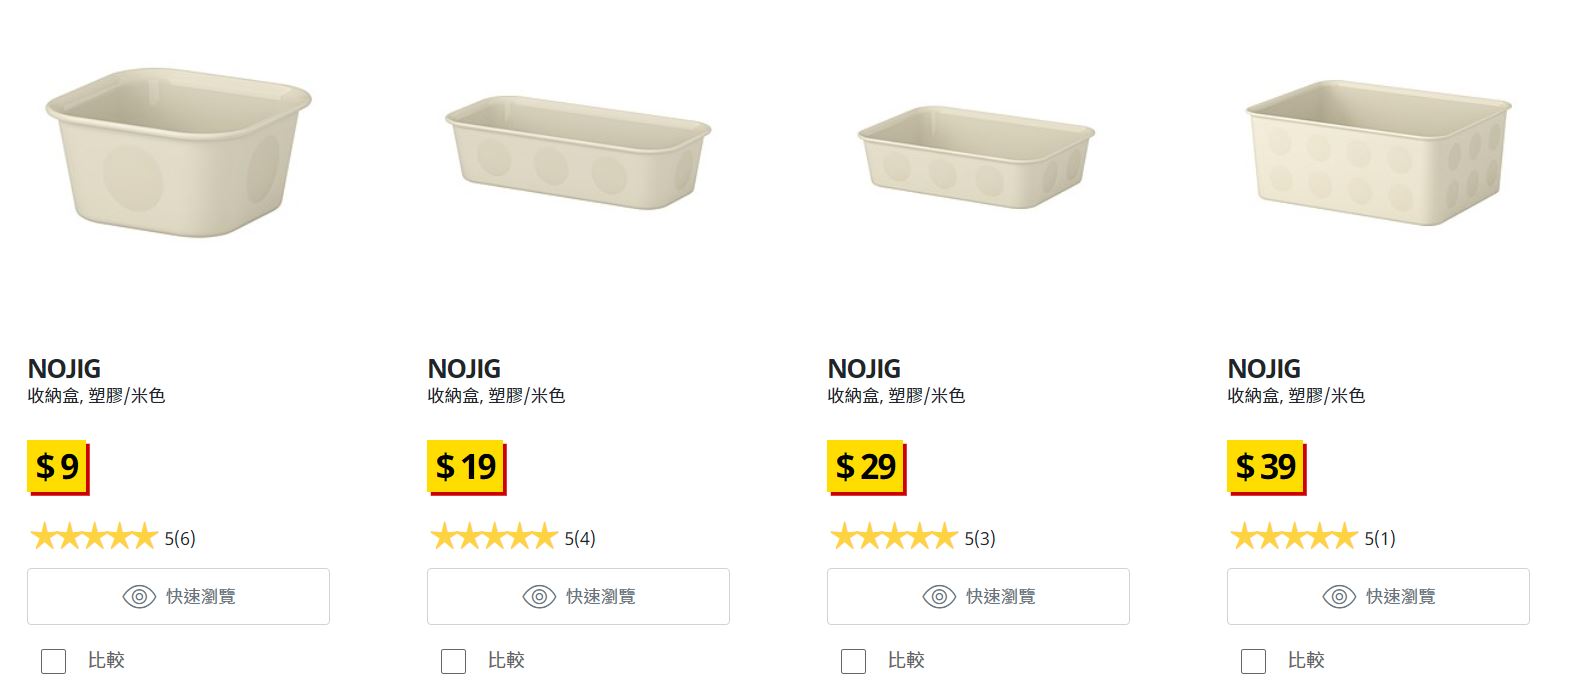 IKEA必買推薦｜十款必買50元內收納小物/廚具用品。19元棉絮拖把、收納筒(門市、餐廳)